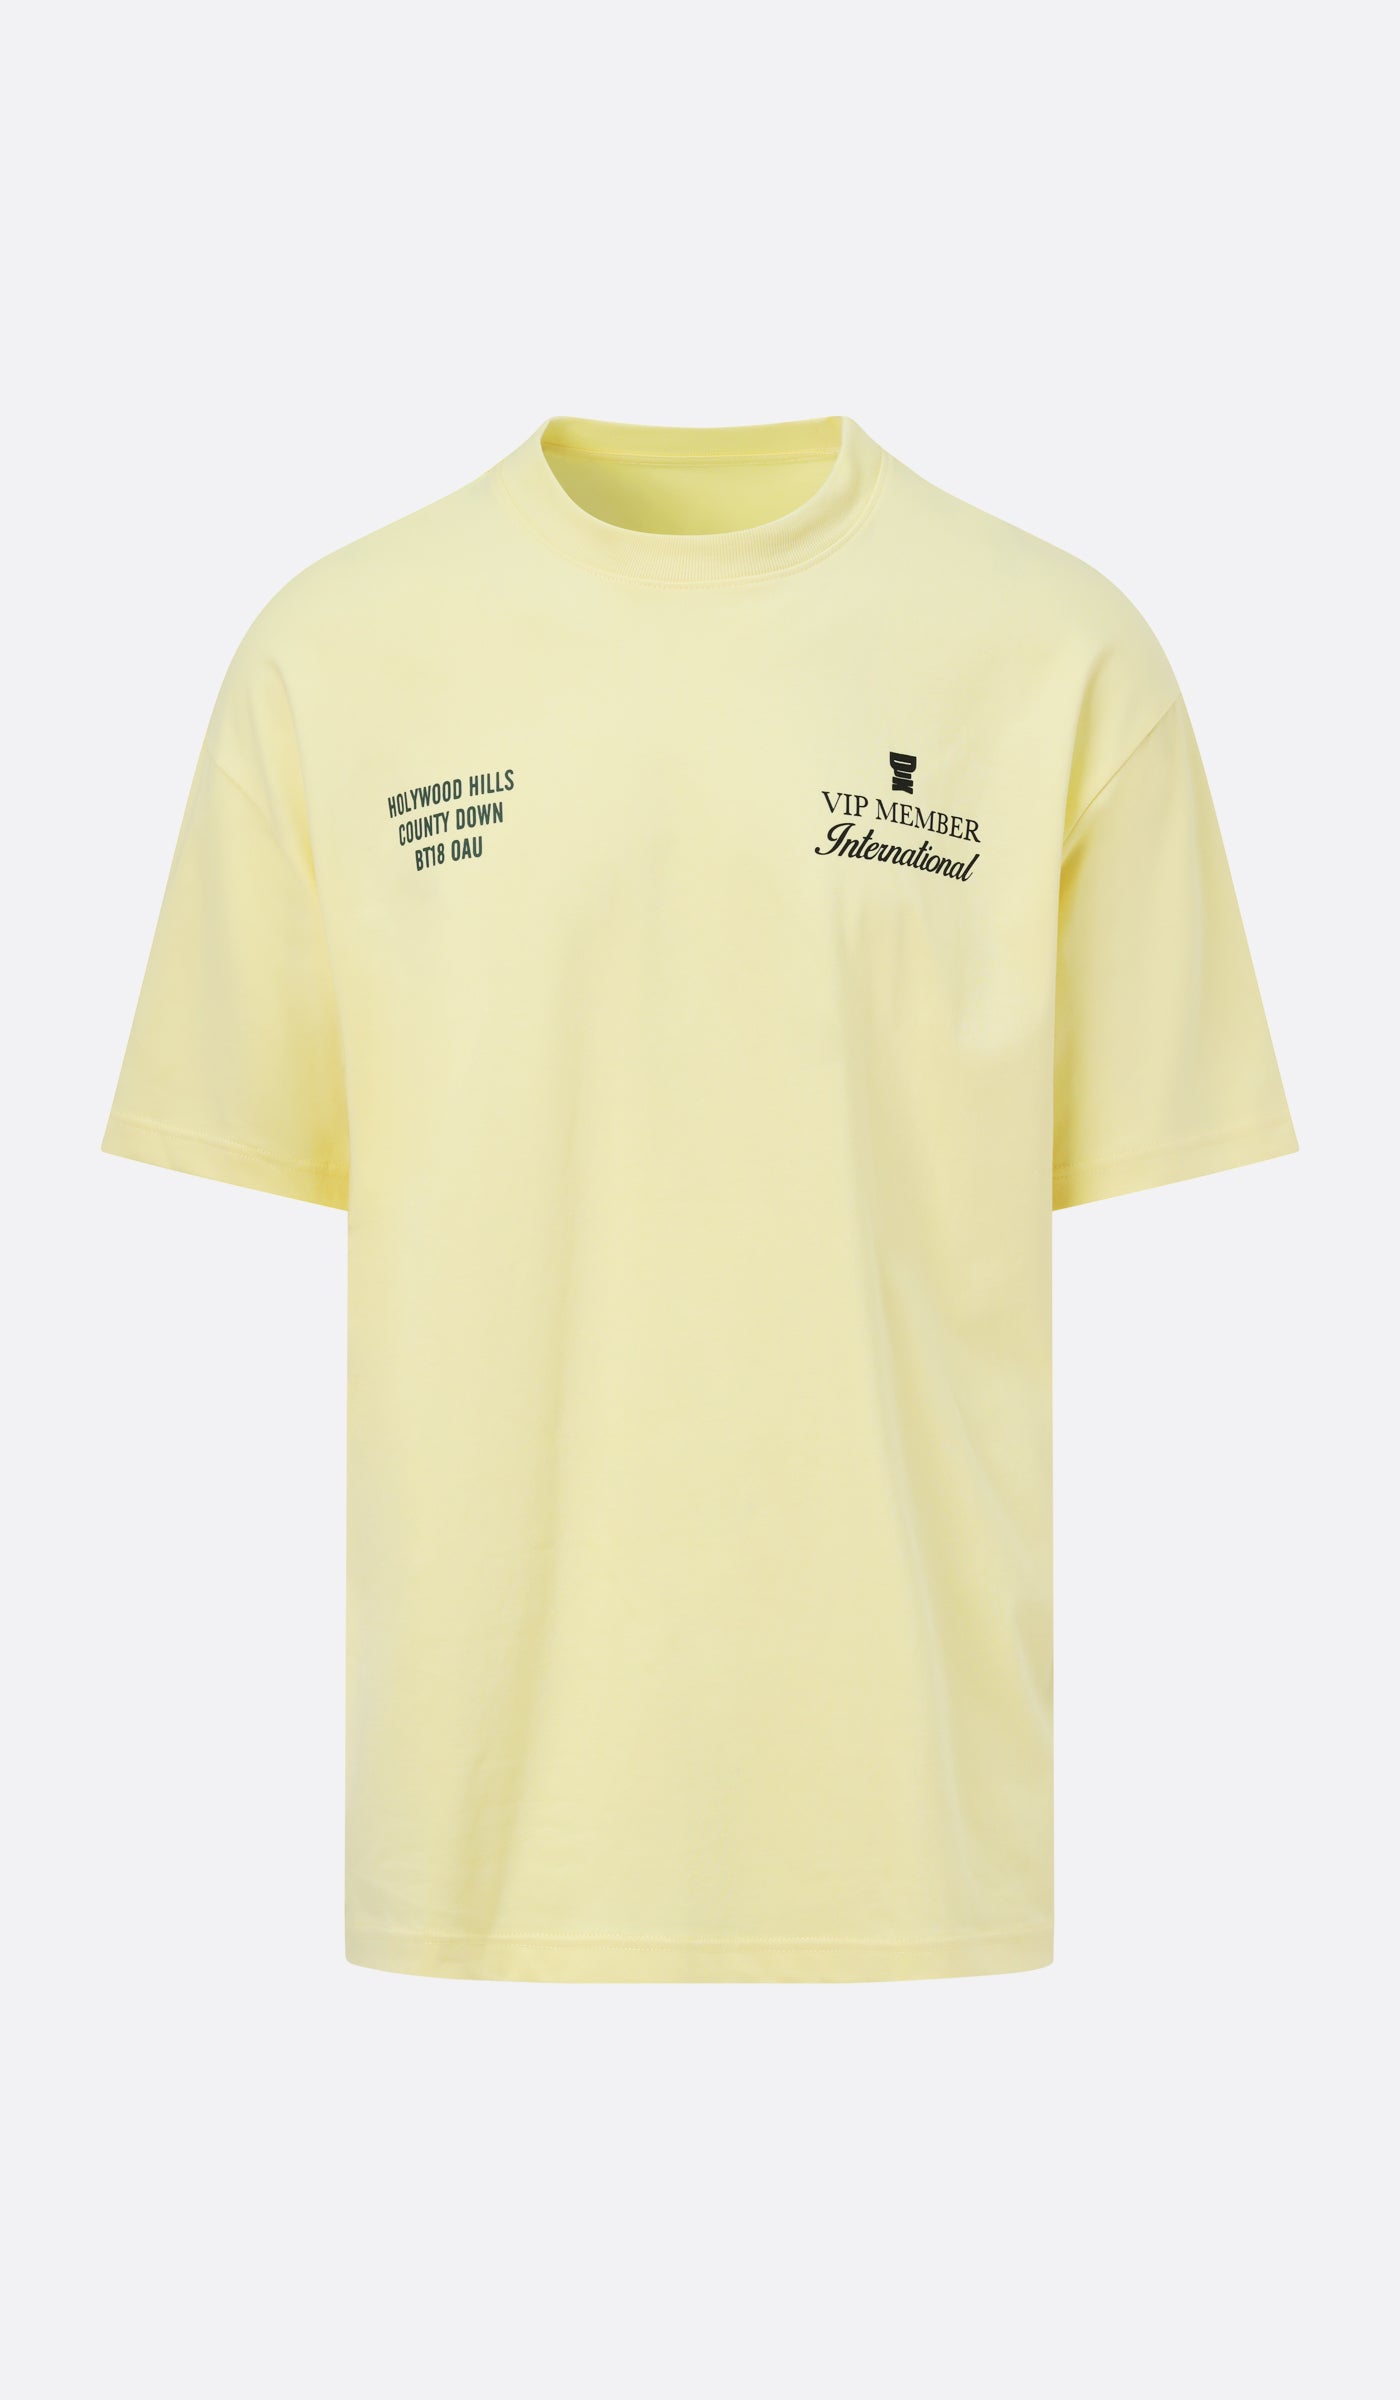 DJK City Series Oversized T-Shirt - County Down